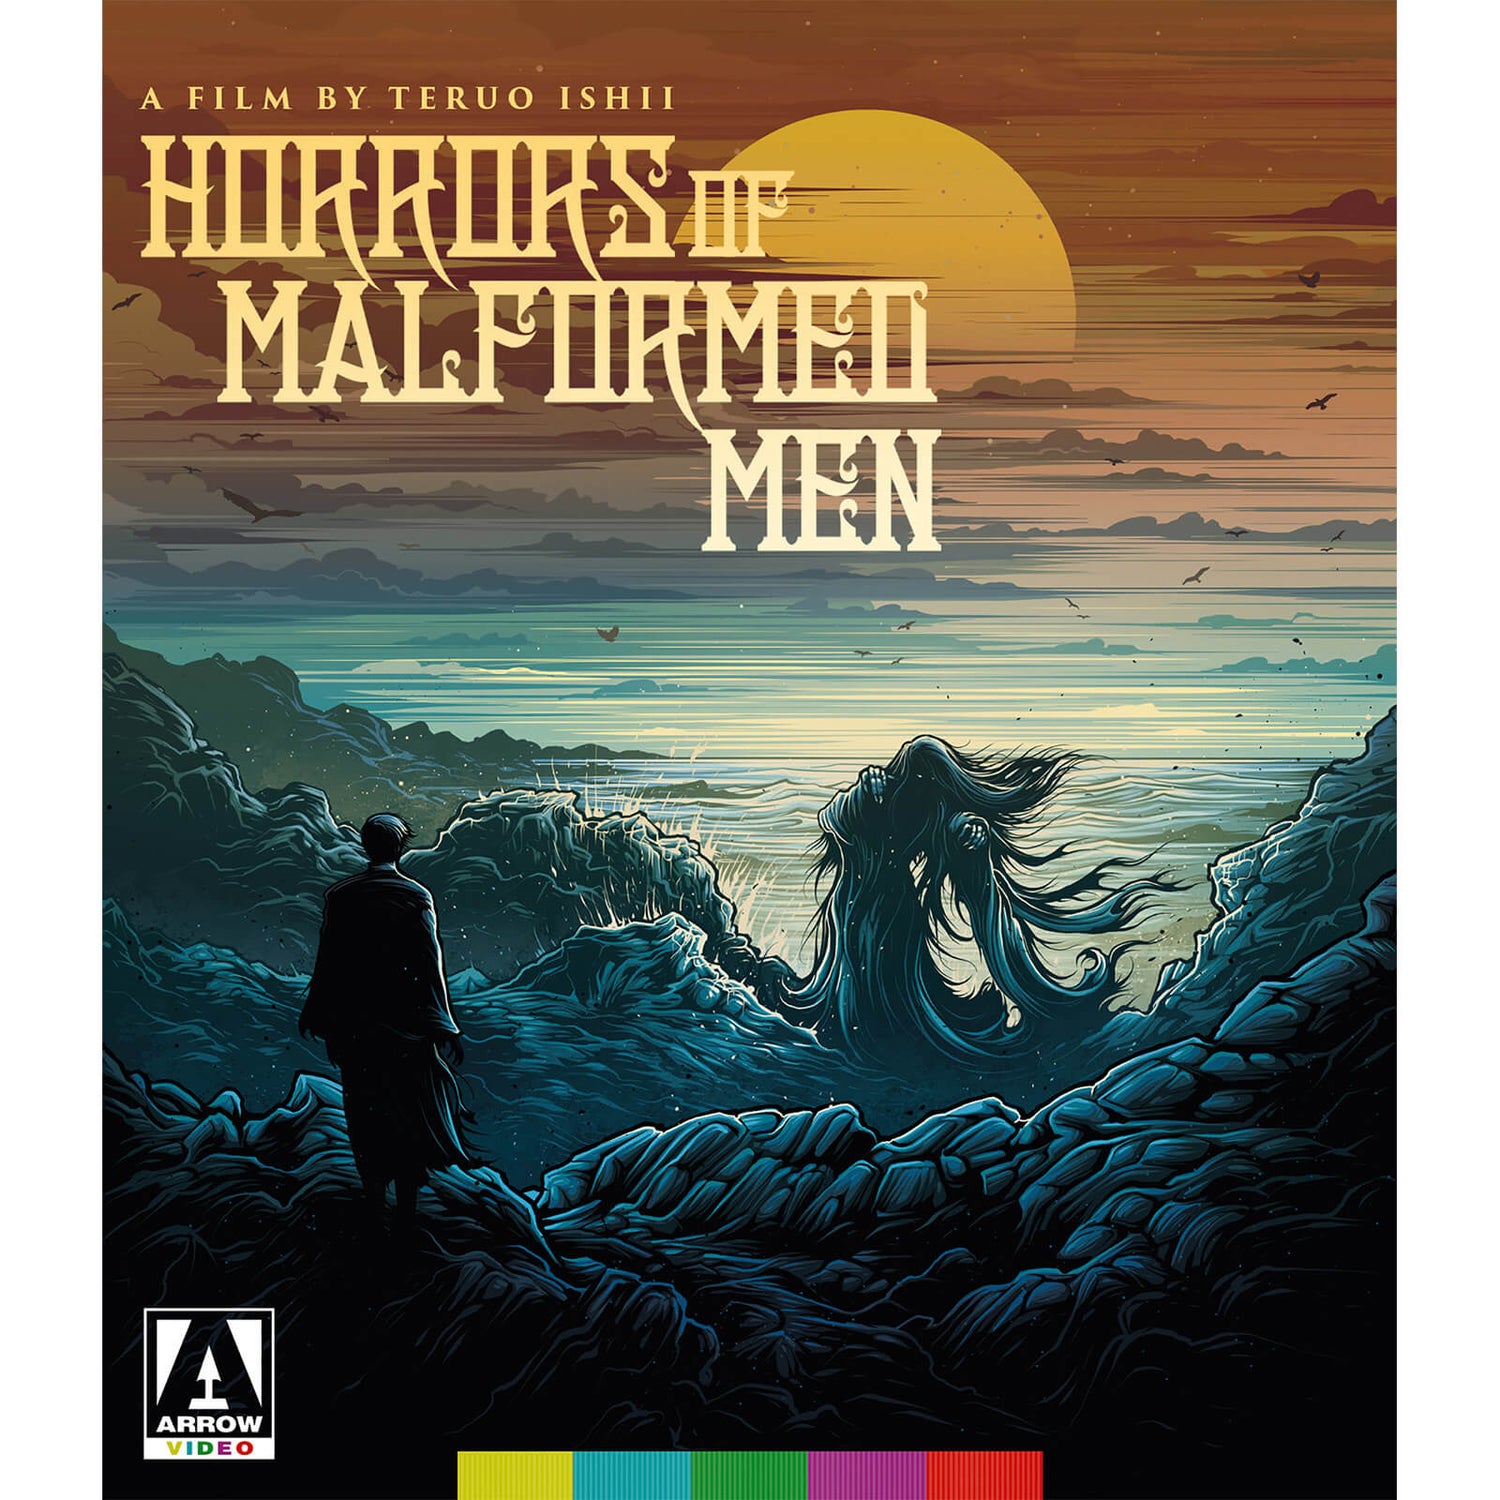 Horrors Of Malformed Men Blu-ray